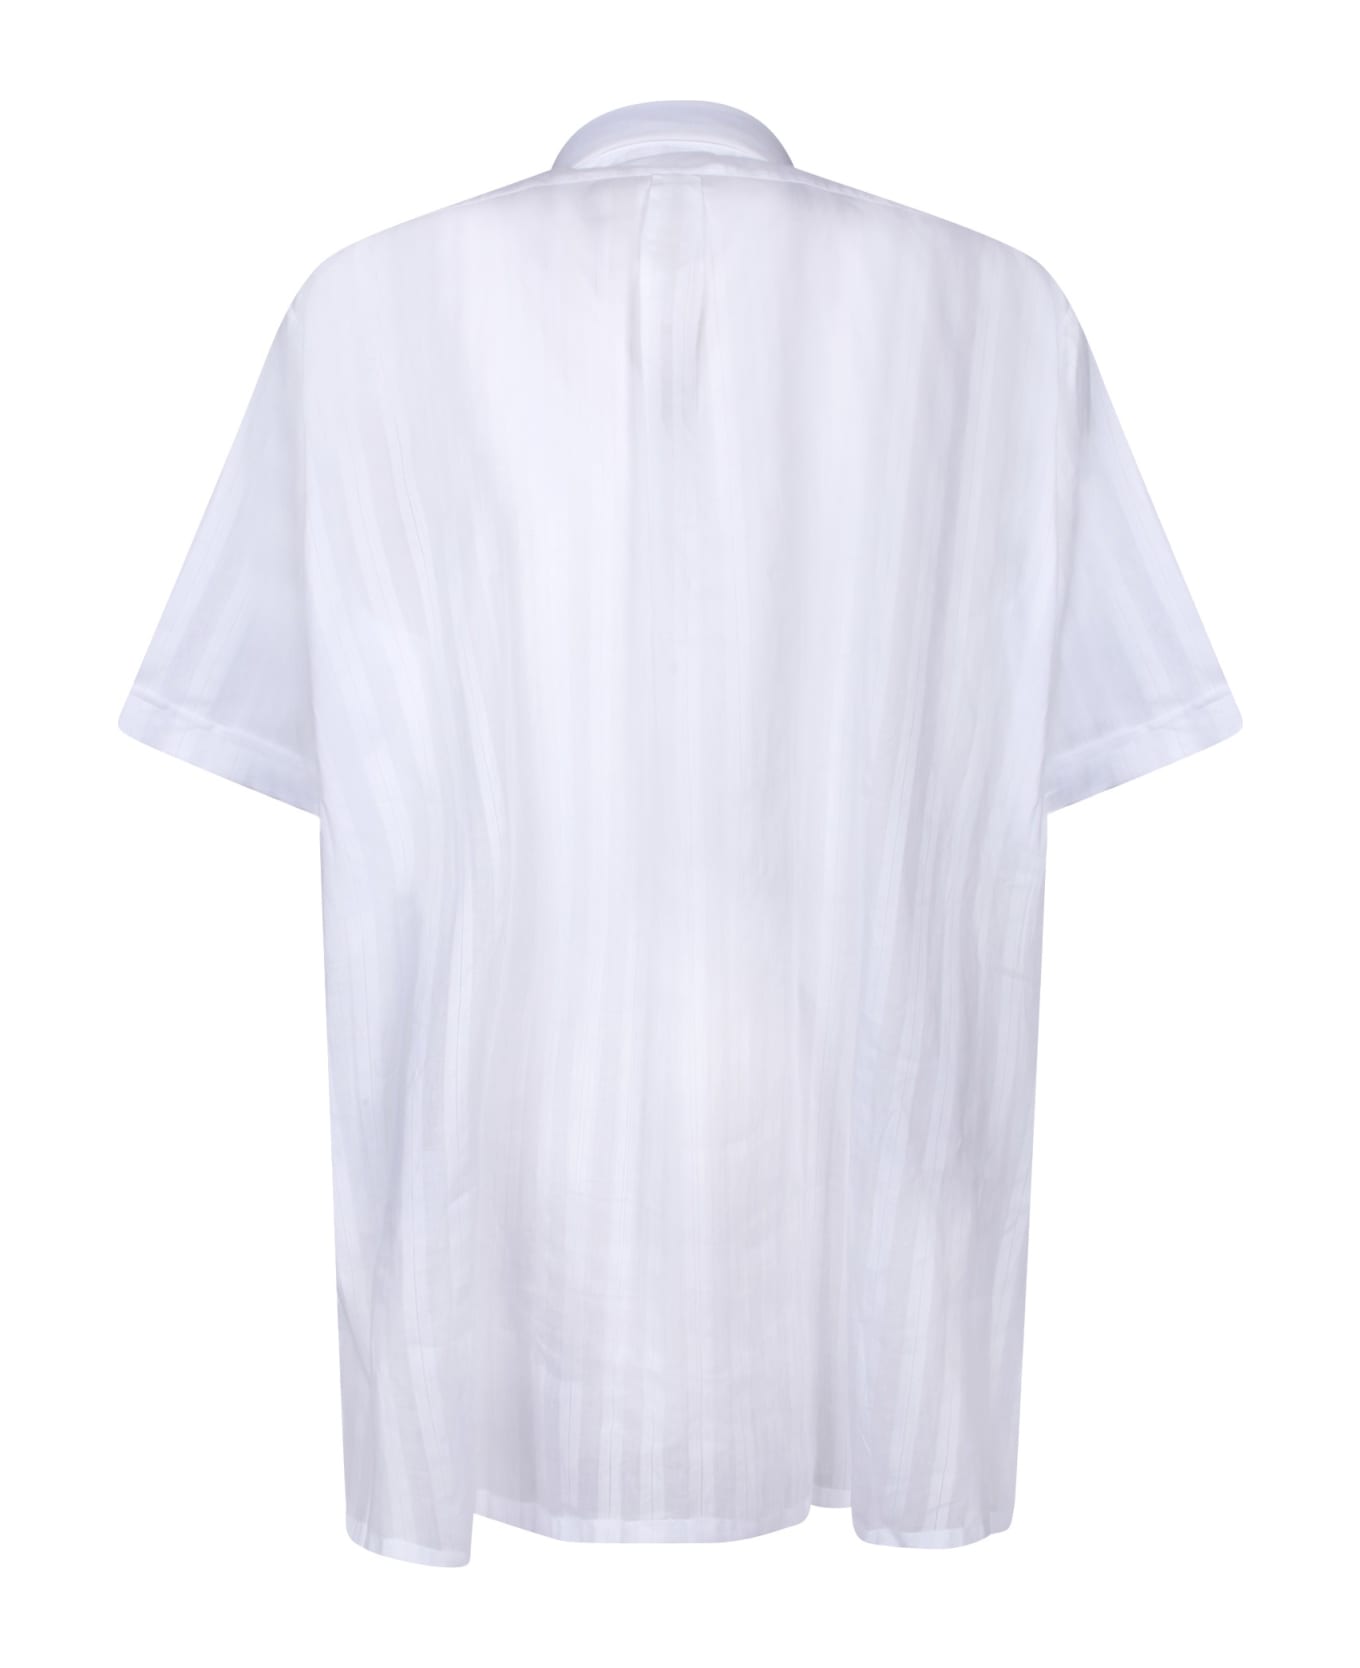 Givenchy Short Sleeves White Shirt - White